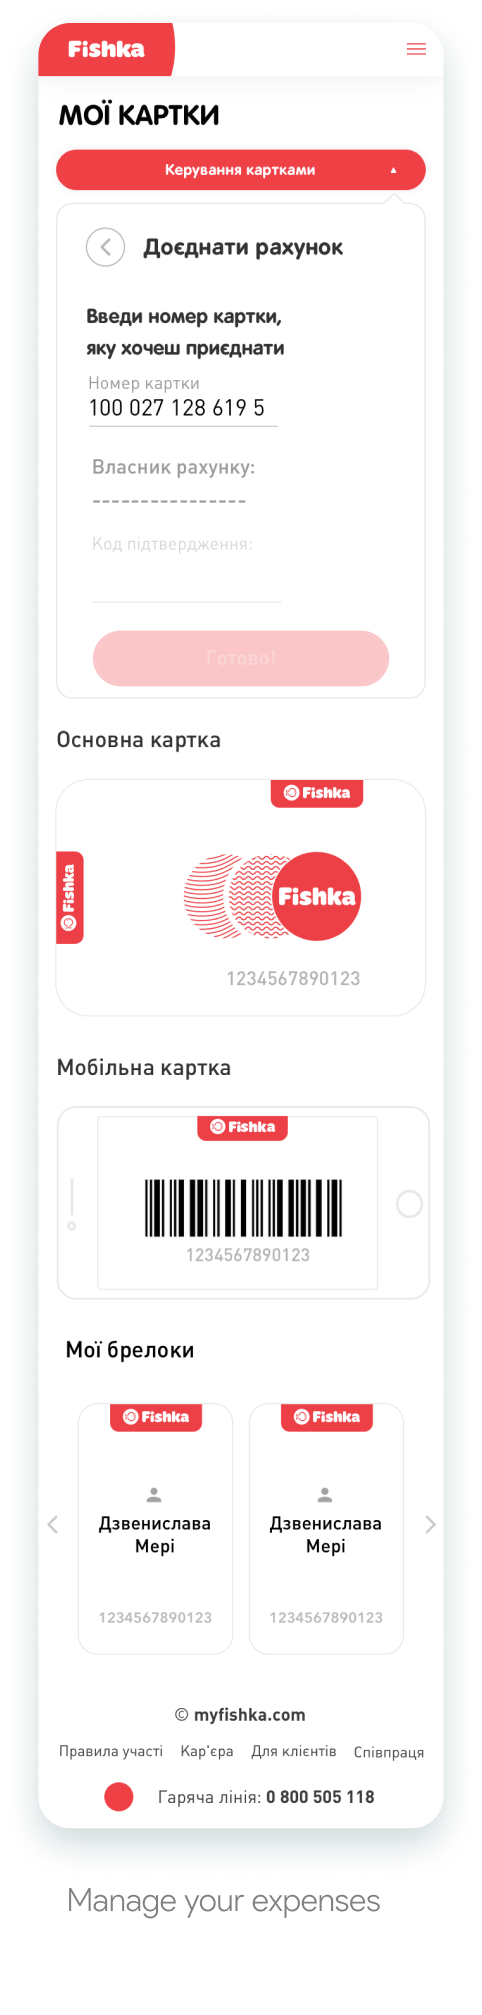 Fishka - fishka-img1 - Qubstudio